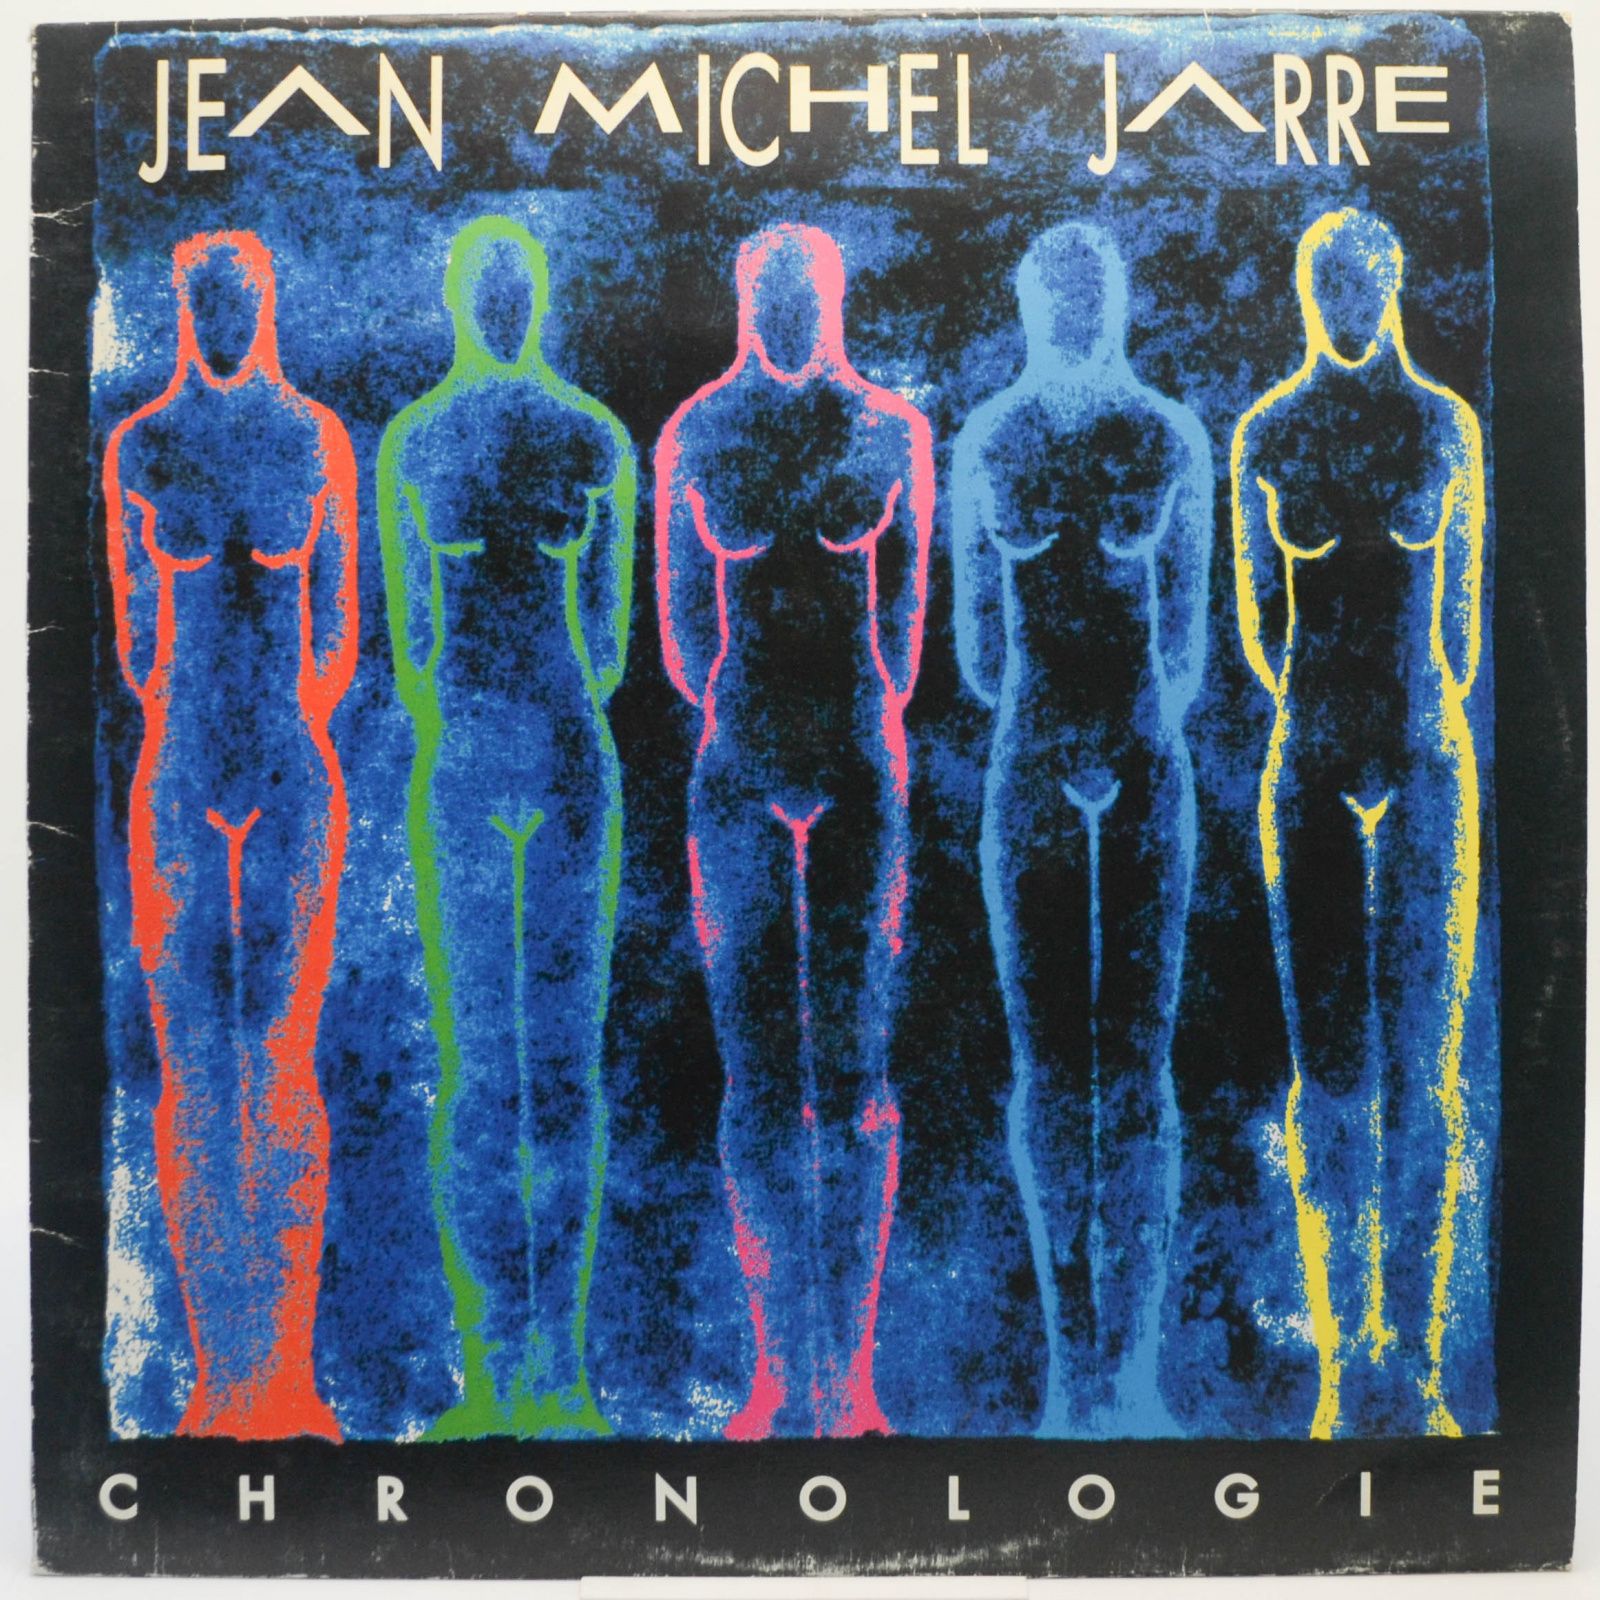 Chronologie, 1993